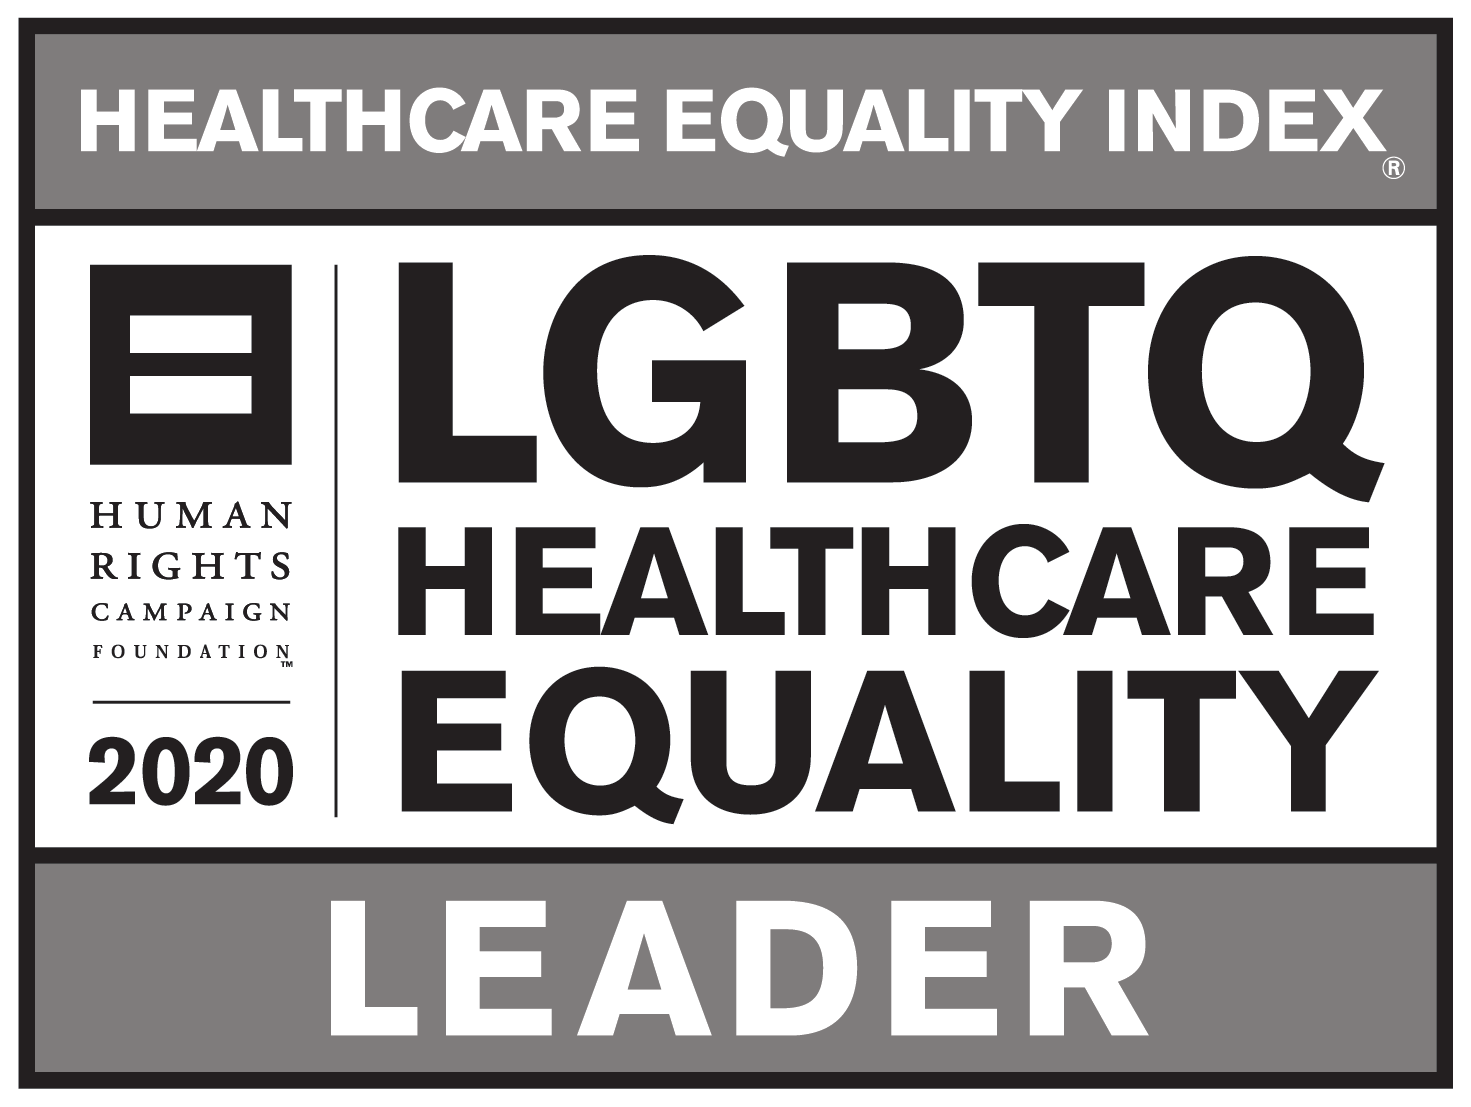 LGBTQ Healthcare Equality Leader